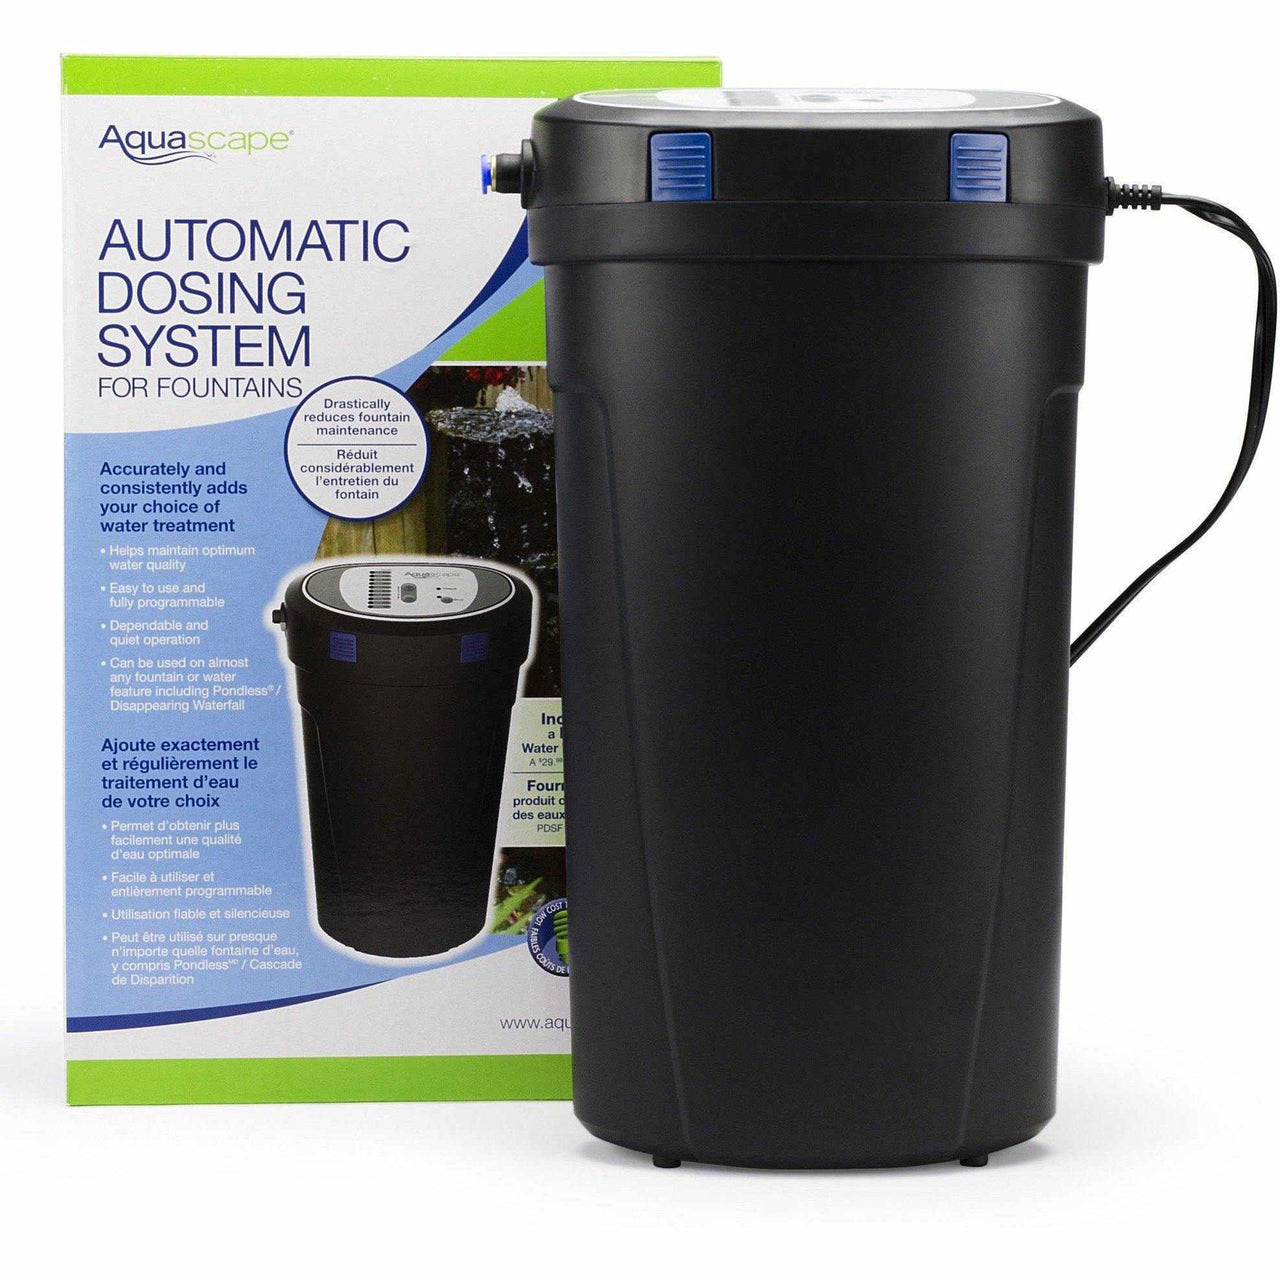 Aquascape Automatic Dosing System for Fountains